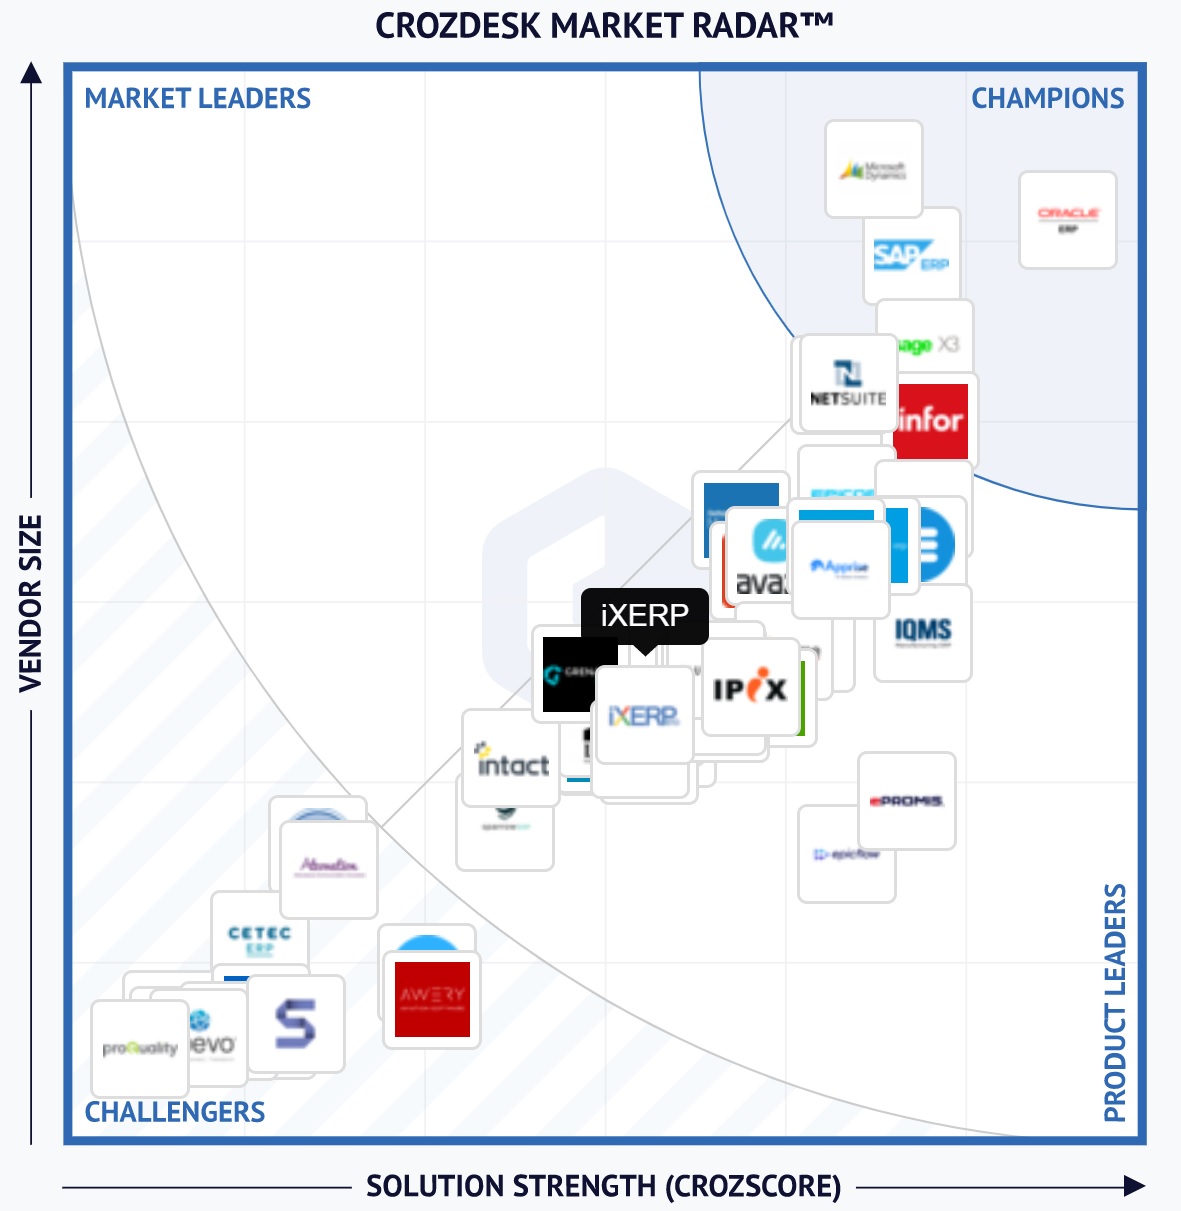 iXERP Named a Market Leader by CorzDesk Market Radar